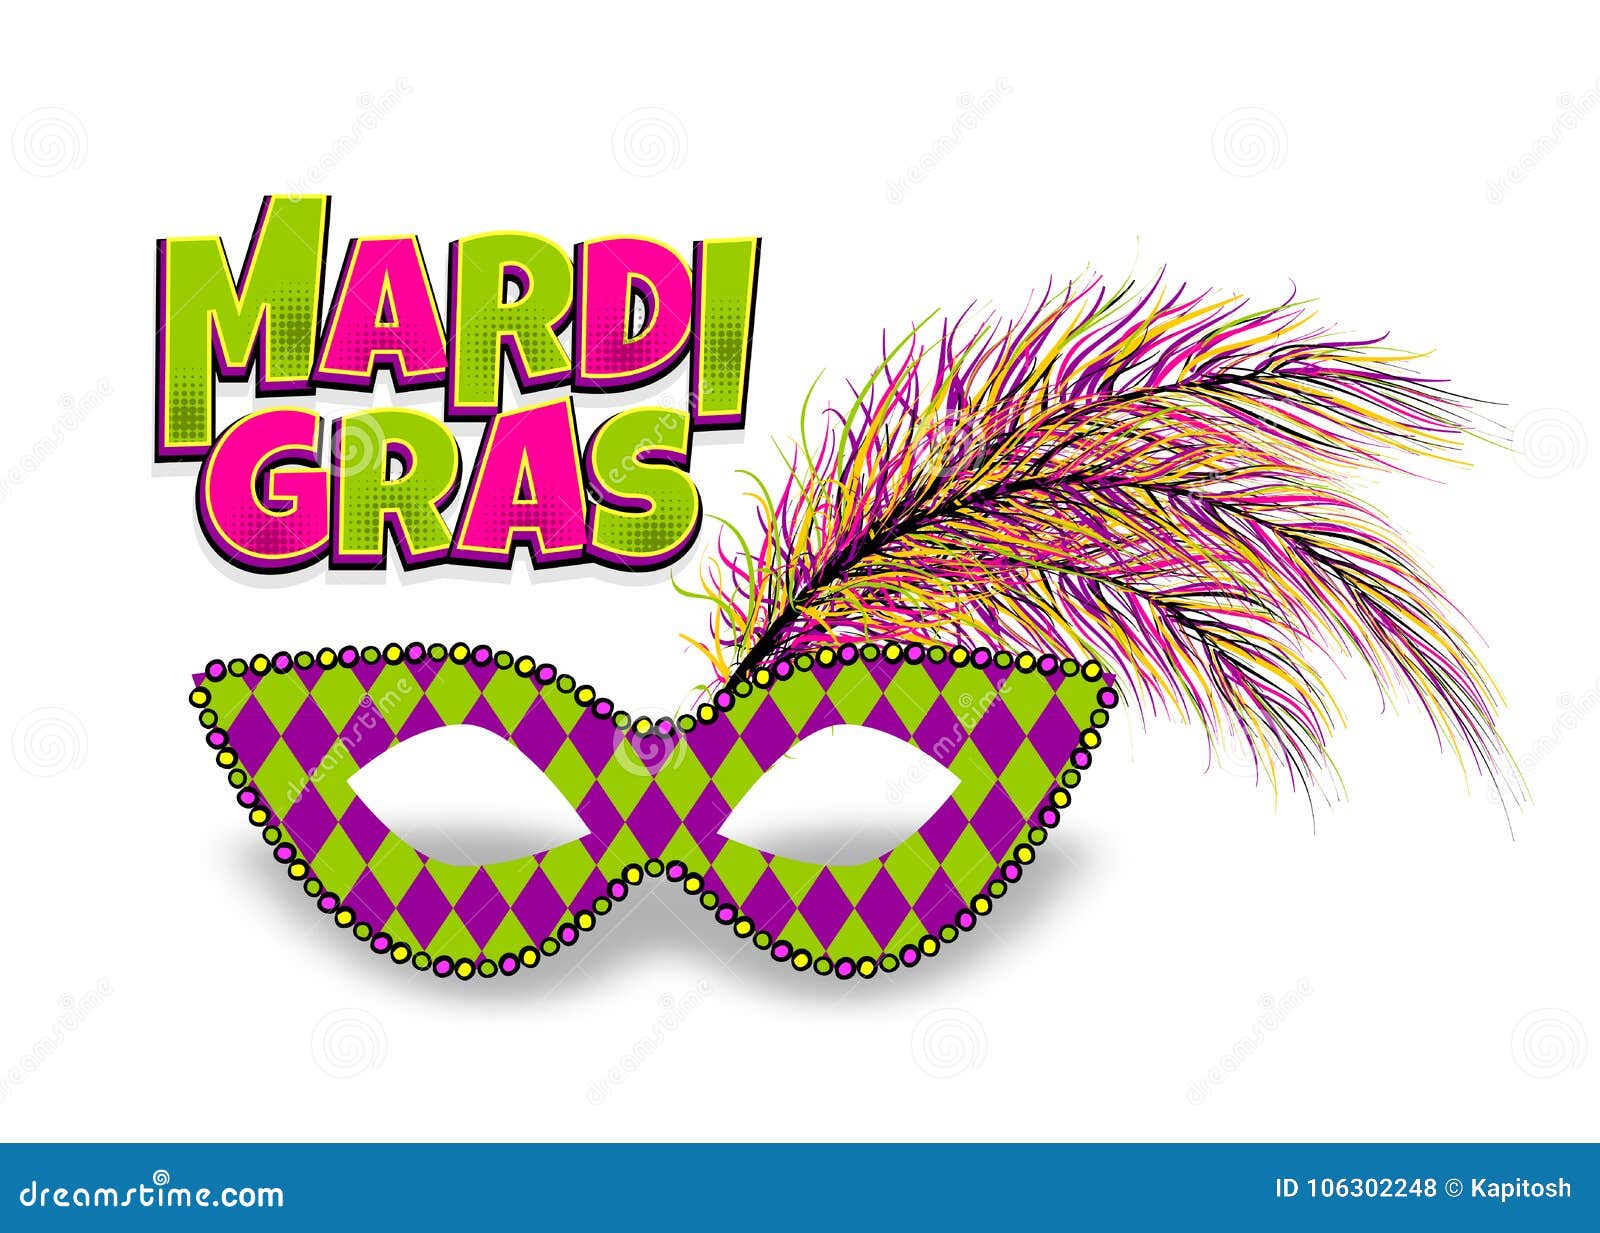 Mardi Gras comic book text stock vector. Illustration of mardi - 106302248